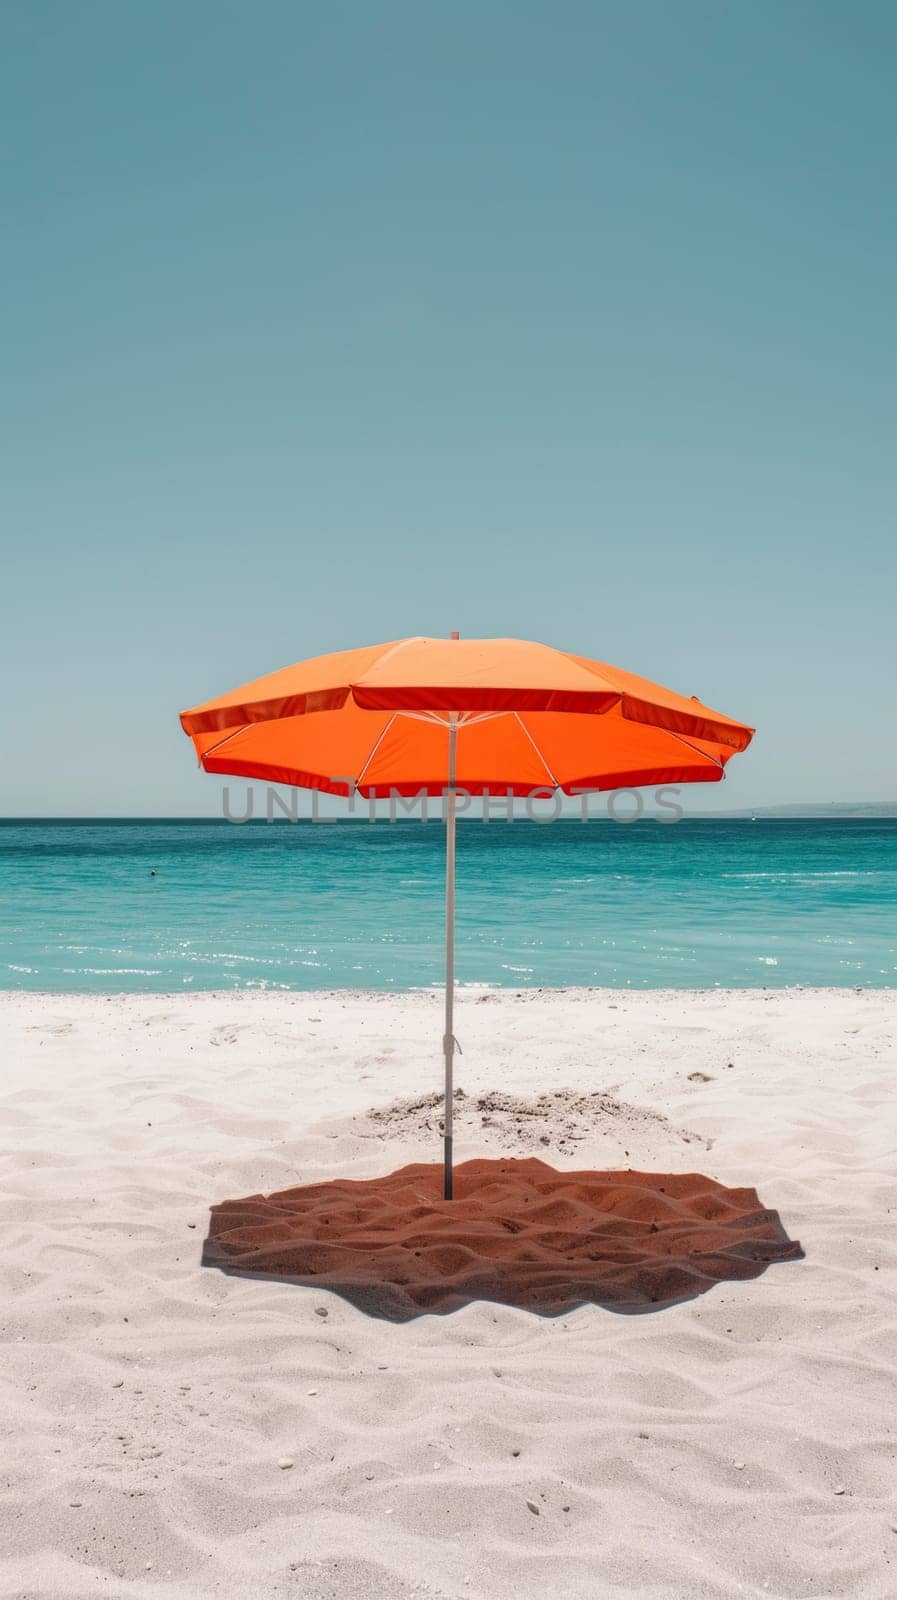 A large orange umbrella on a sandy beach near the ocean, AI by starush